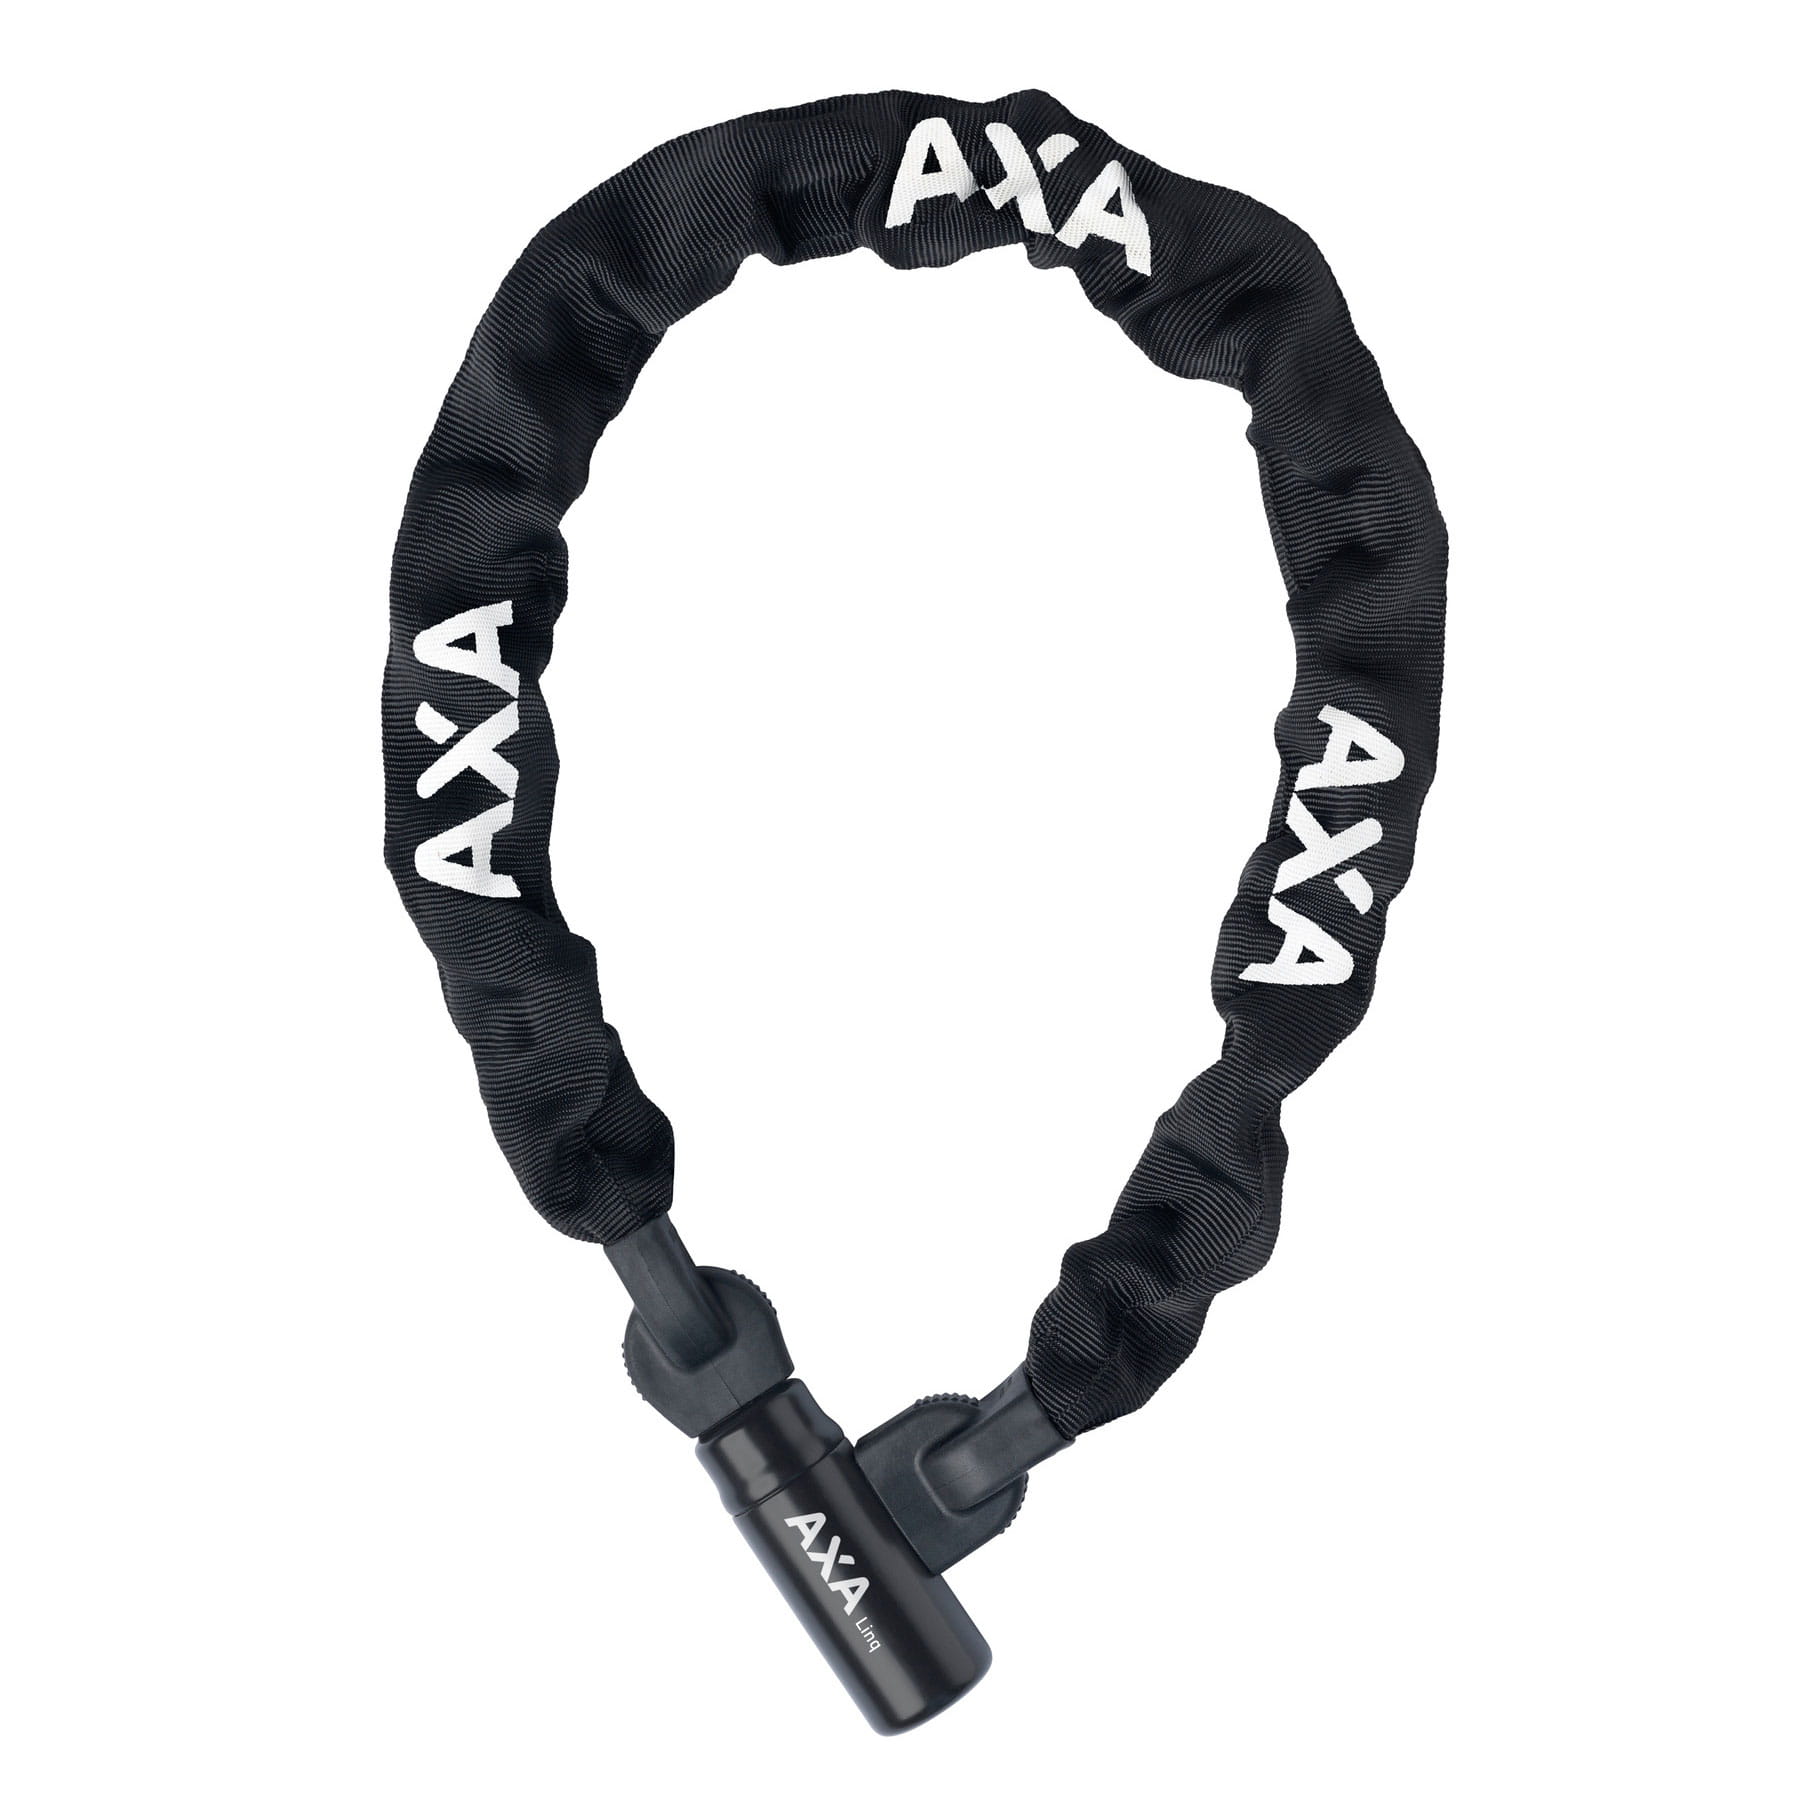 AXA Linq 100 Chain Lock 100 cm, ø 9.5 mm